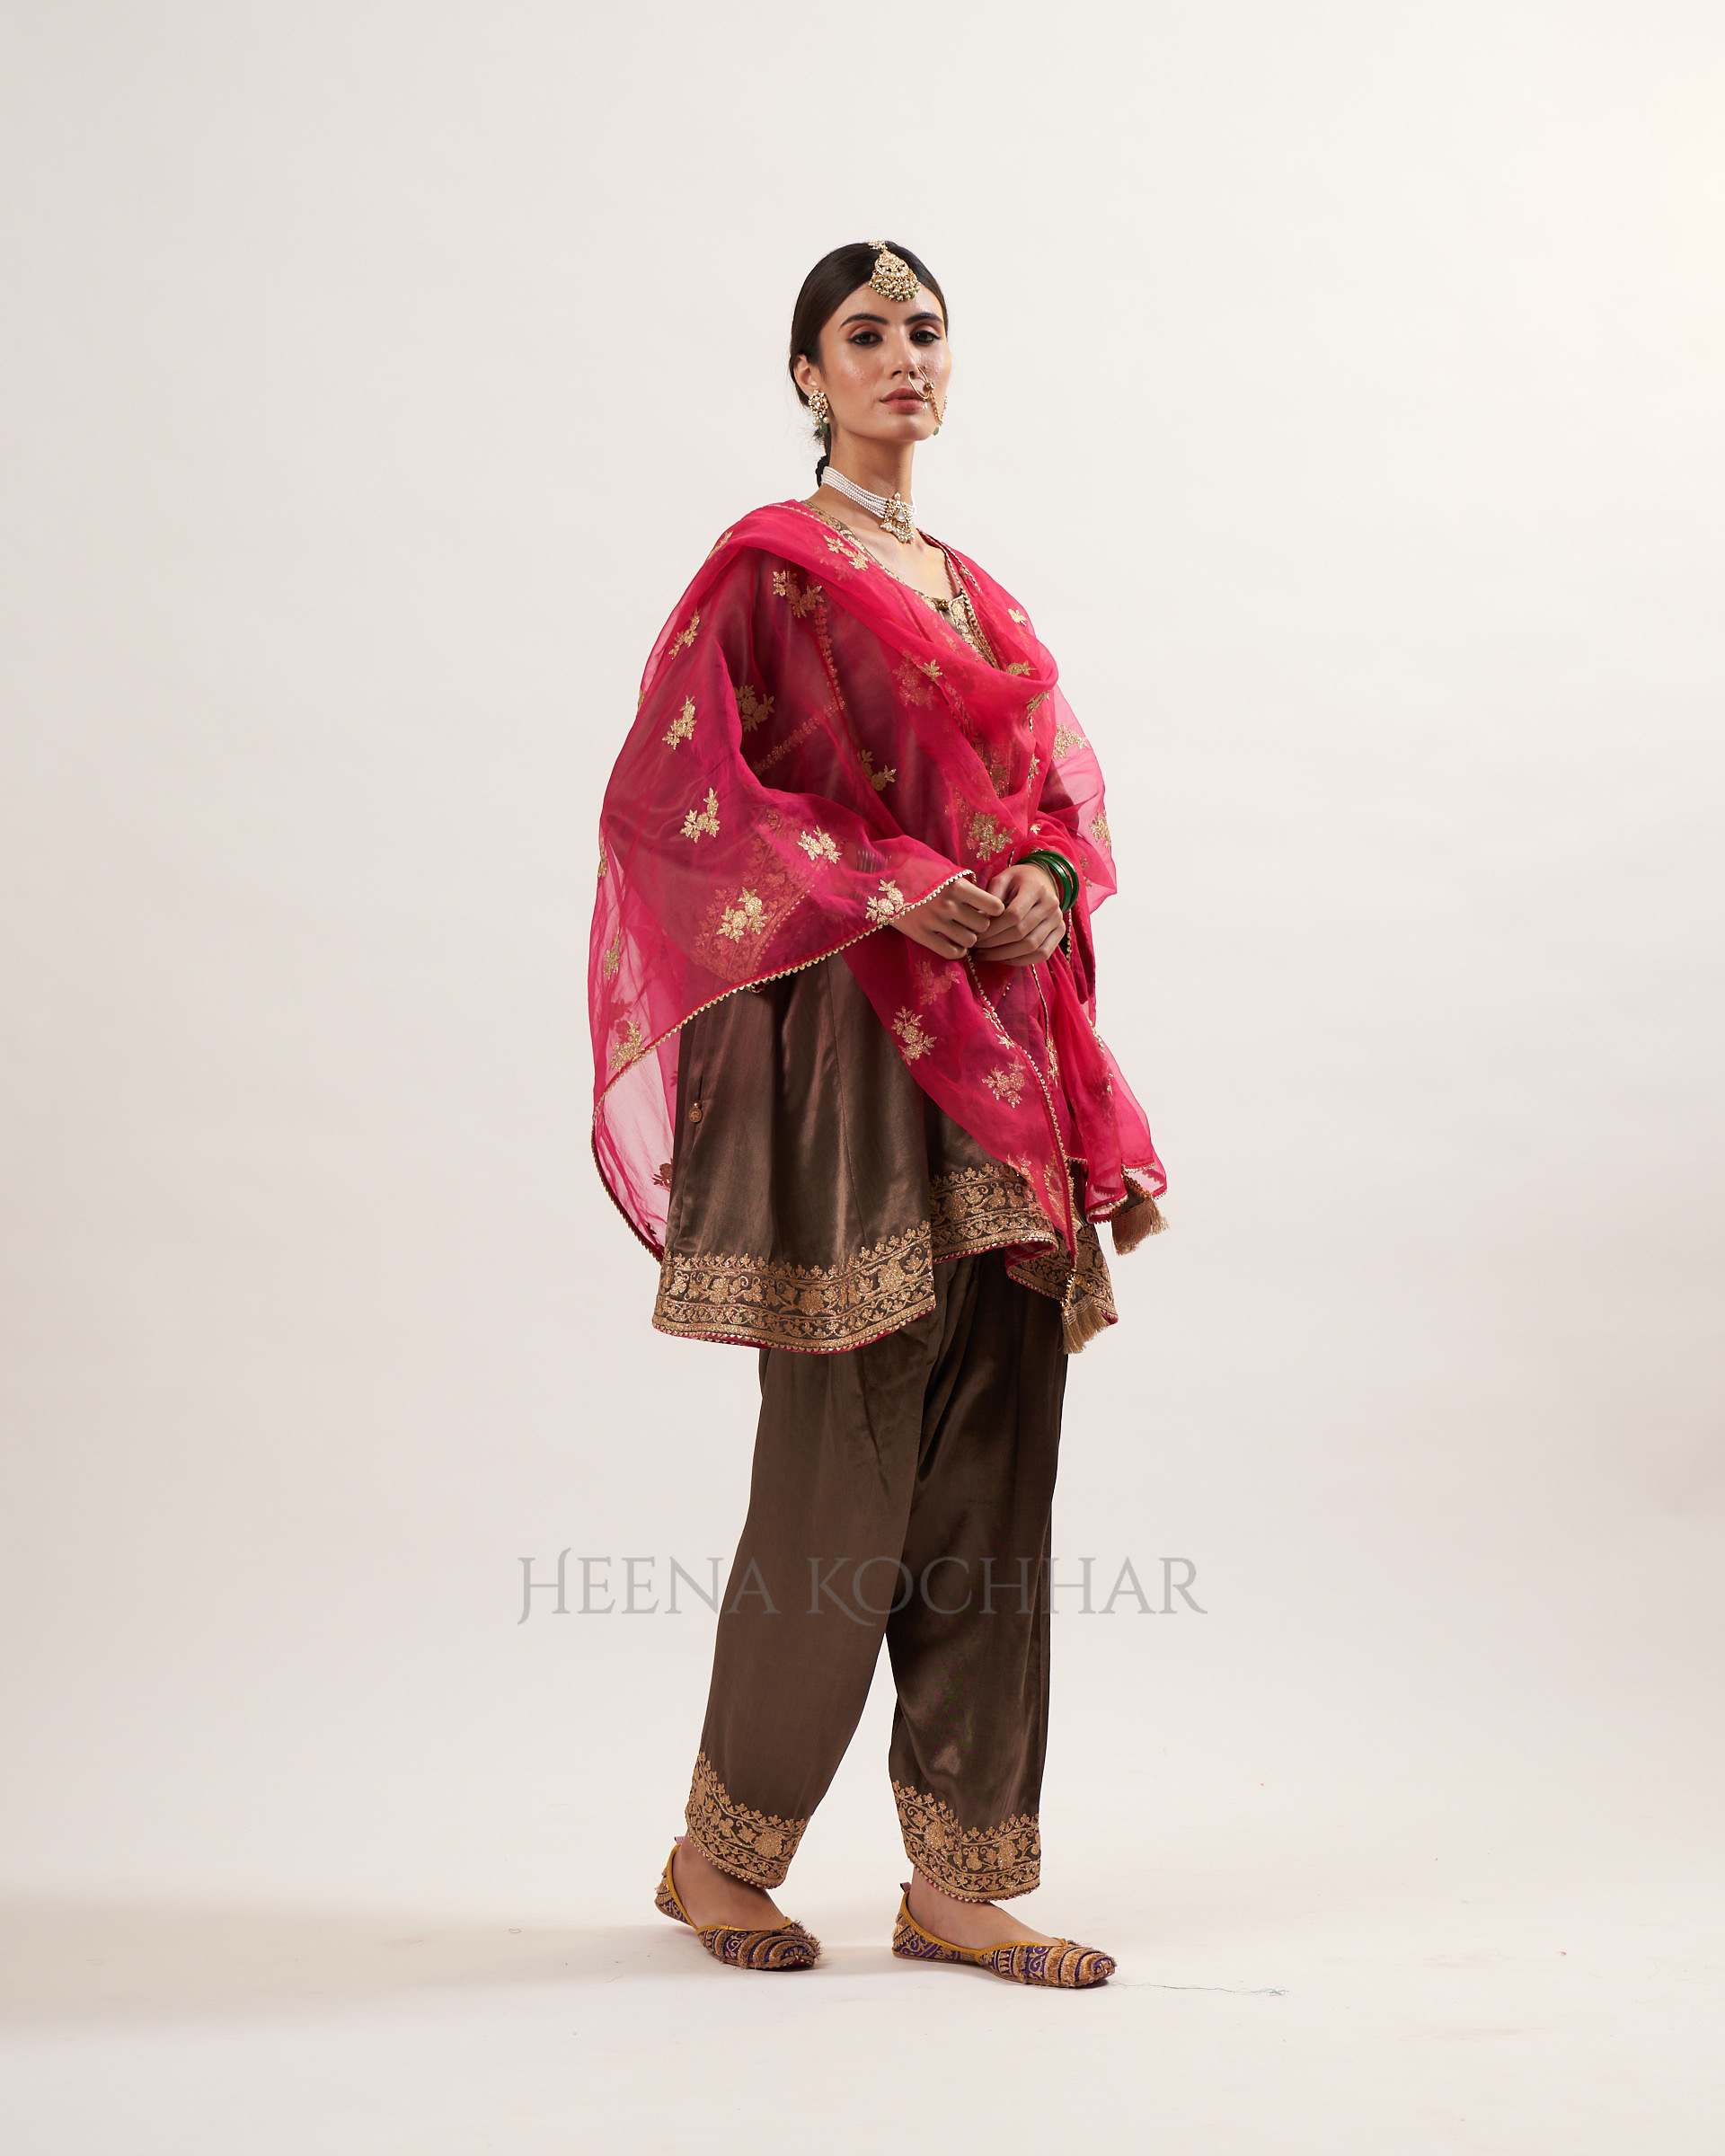 Sakhiya - Heena Kochhar